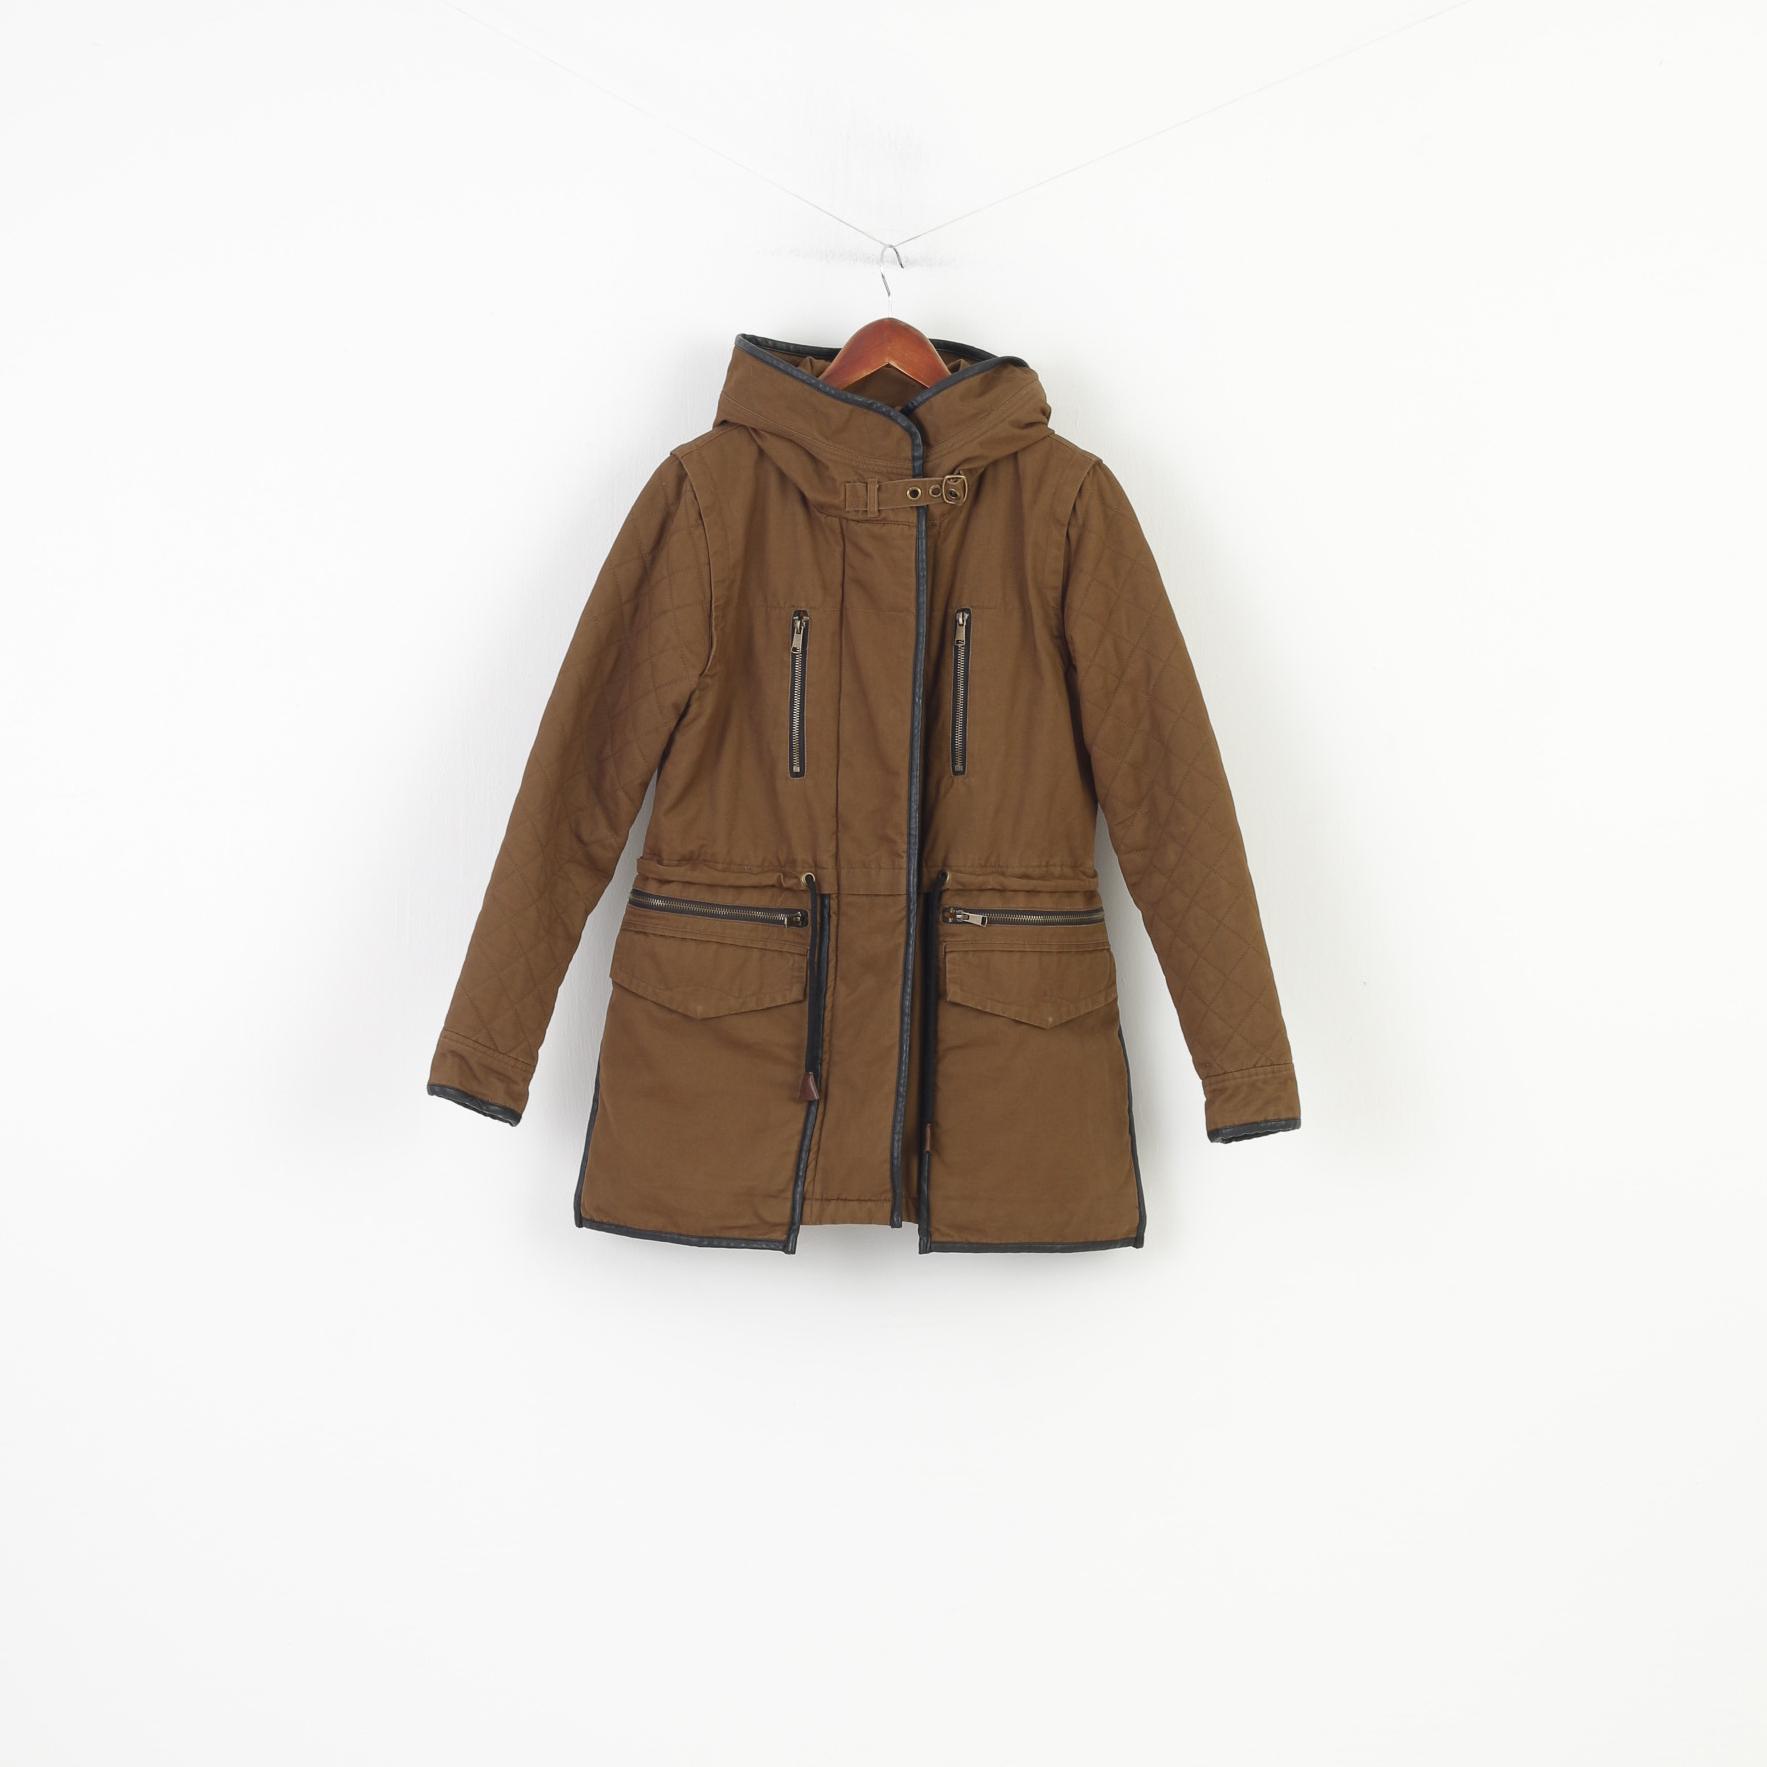 Epister Woman L M Jacket Khaki Padded Full Zipper Hood Winter Pockets Cotton Vintage Top